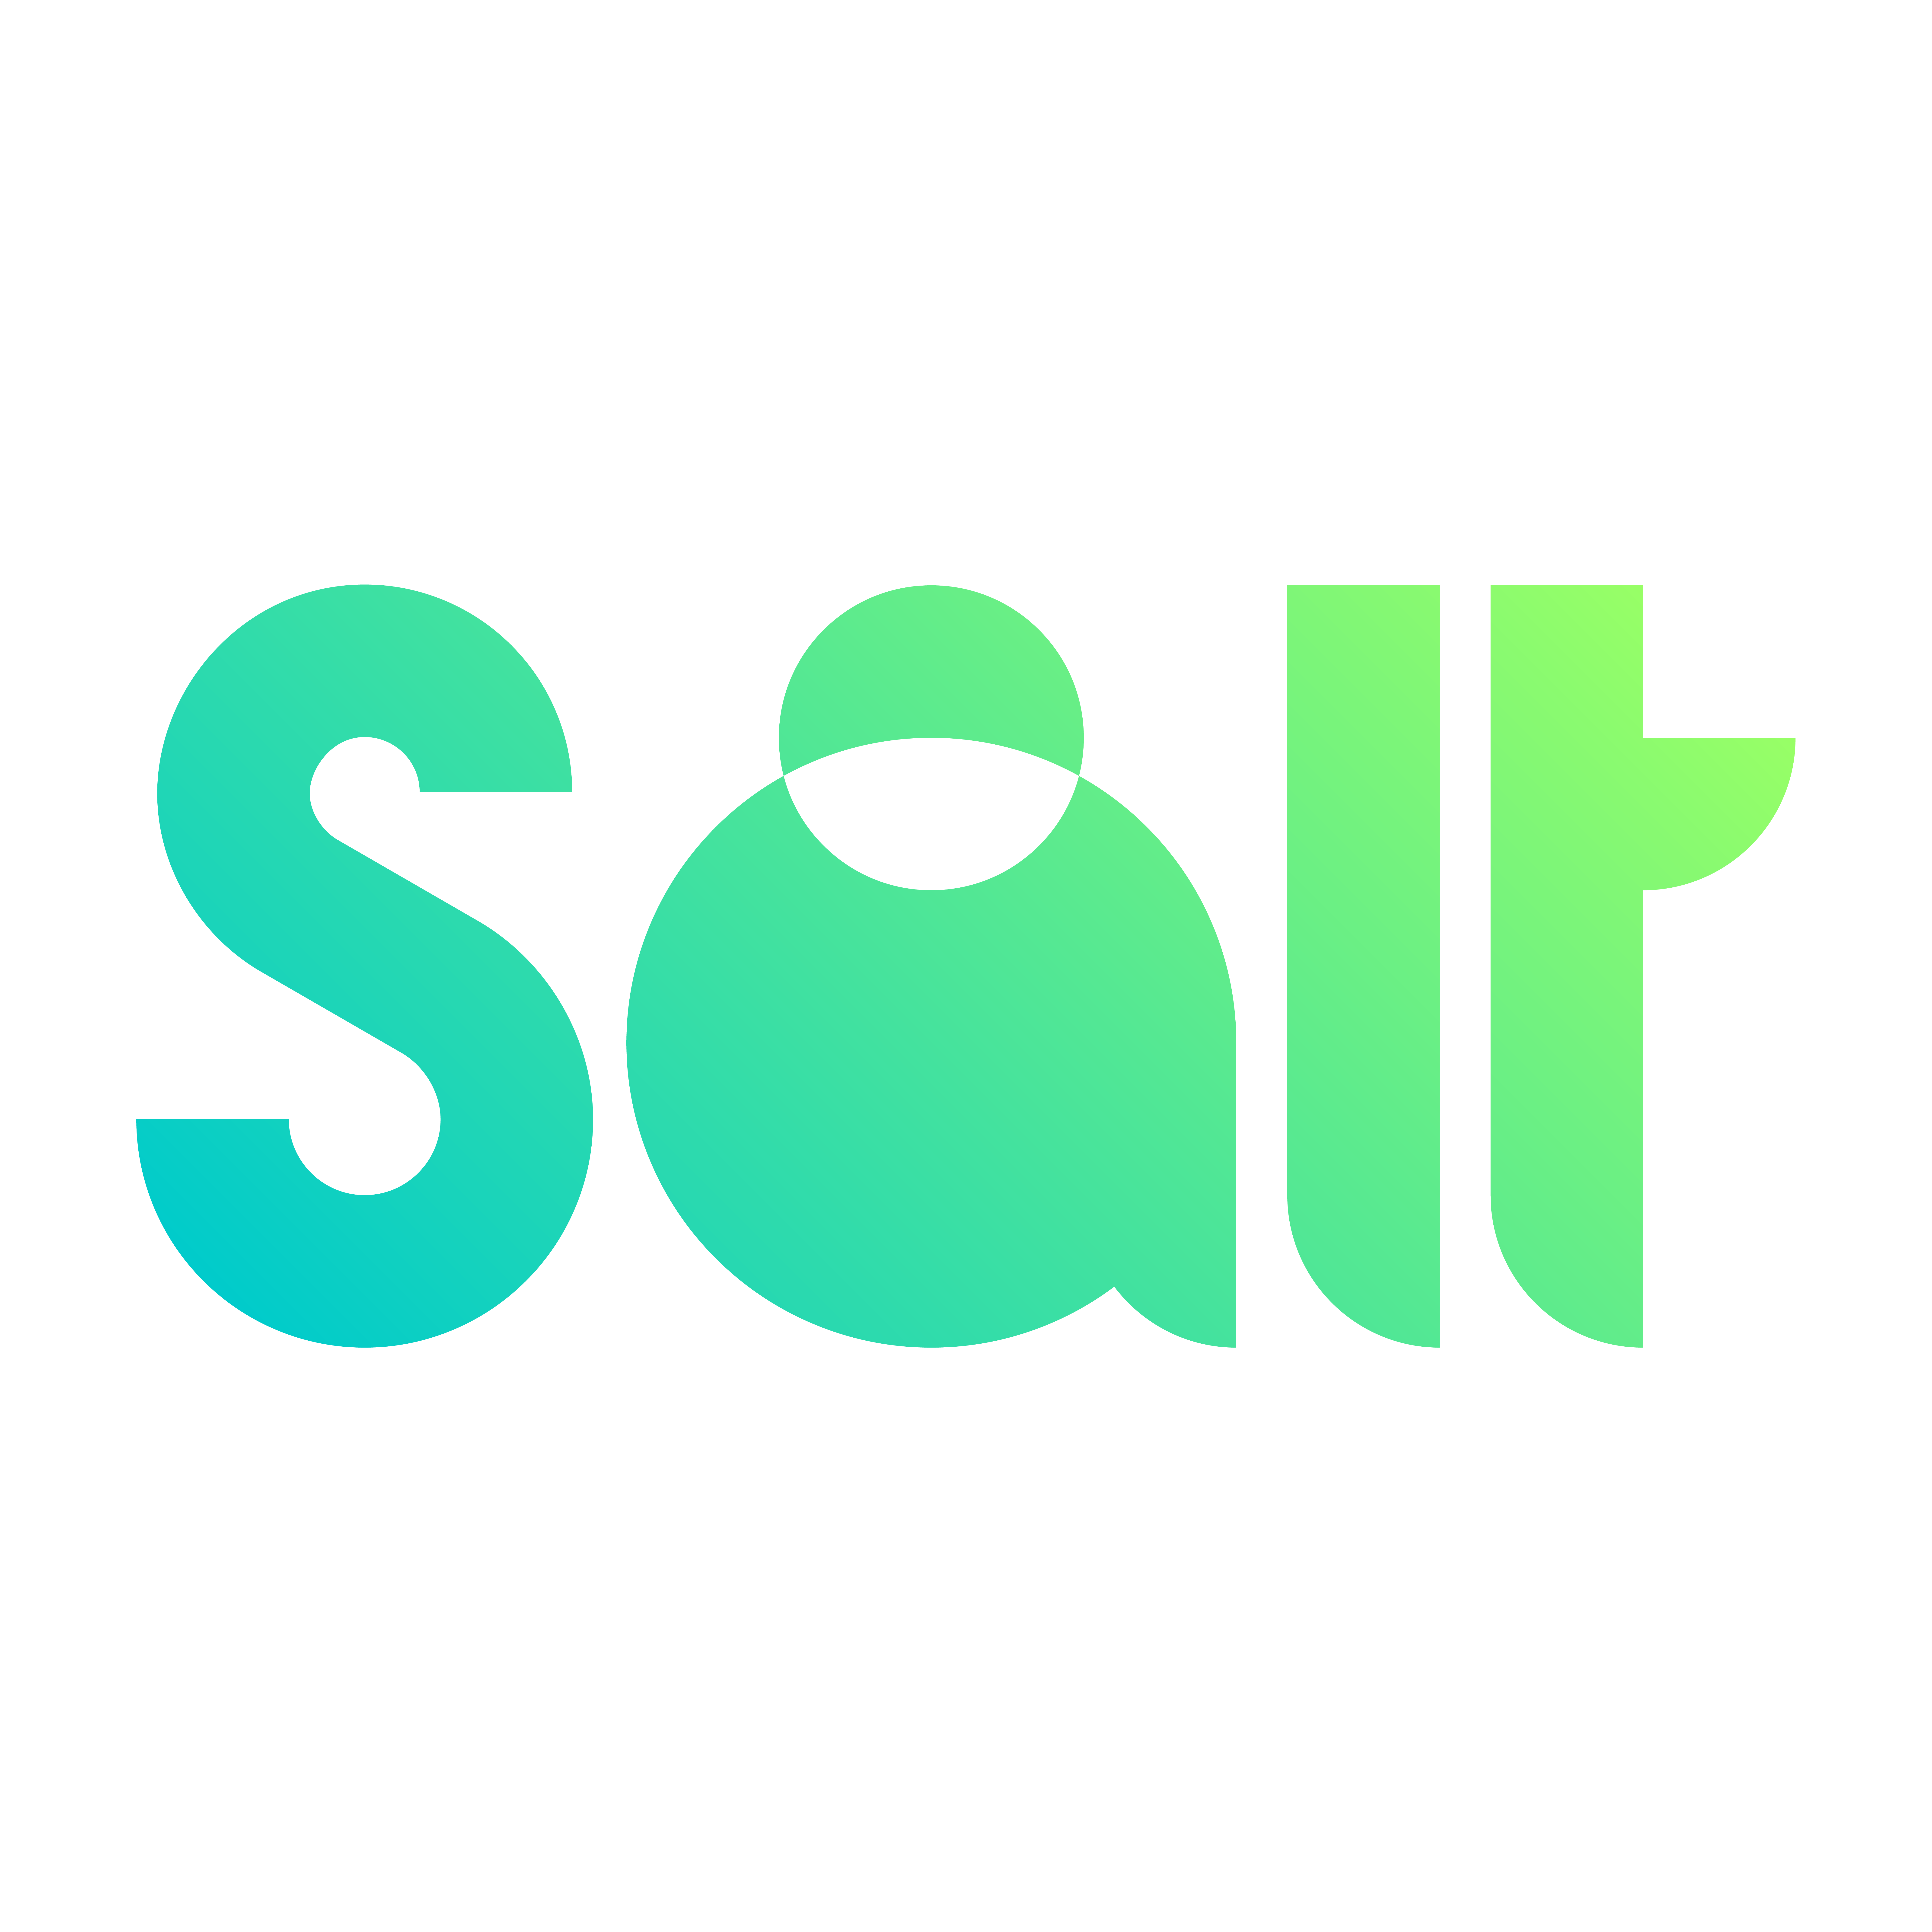 Salt Bank: debutul unui brand inovator în sectorul bancar digital din România